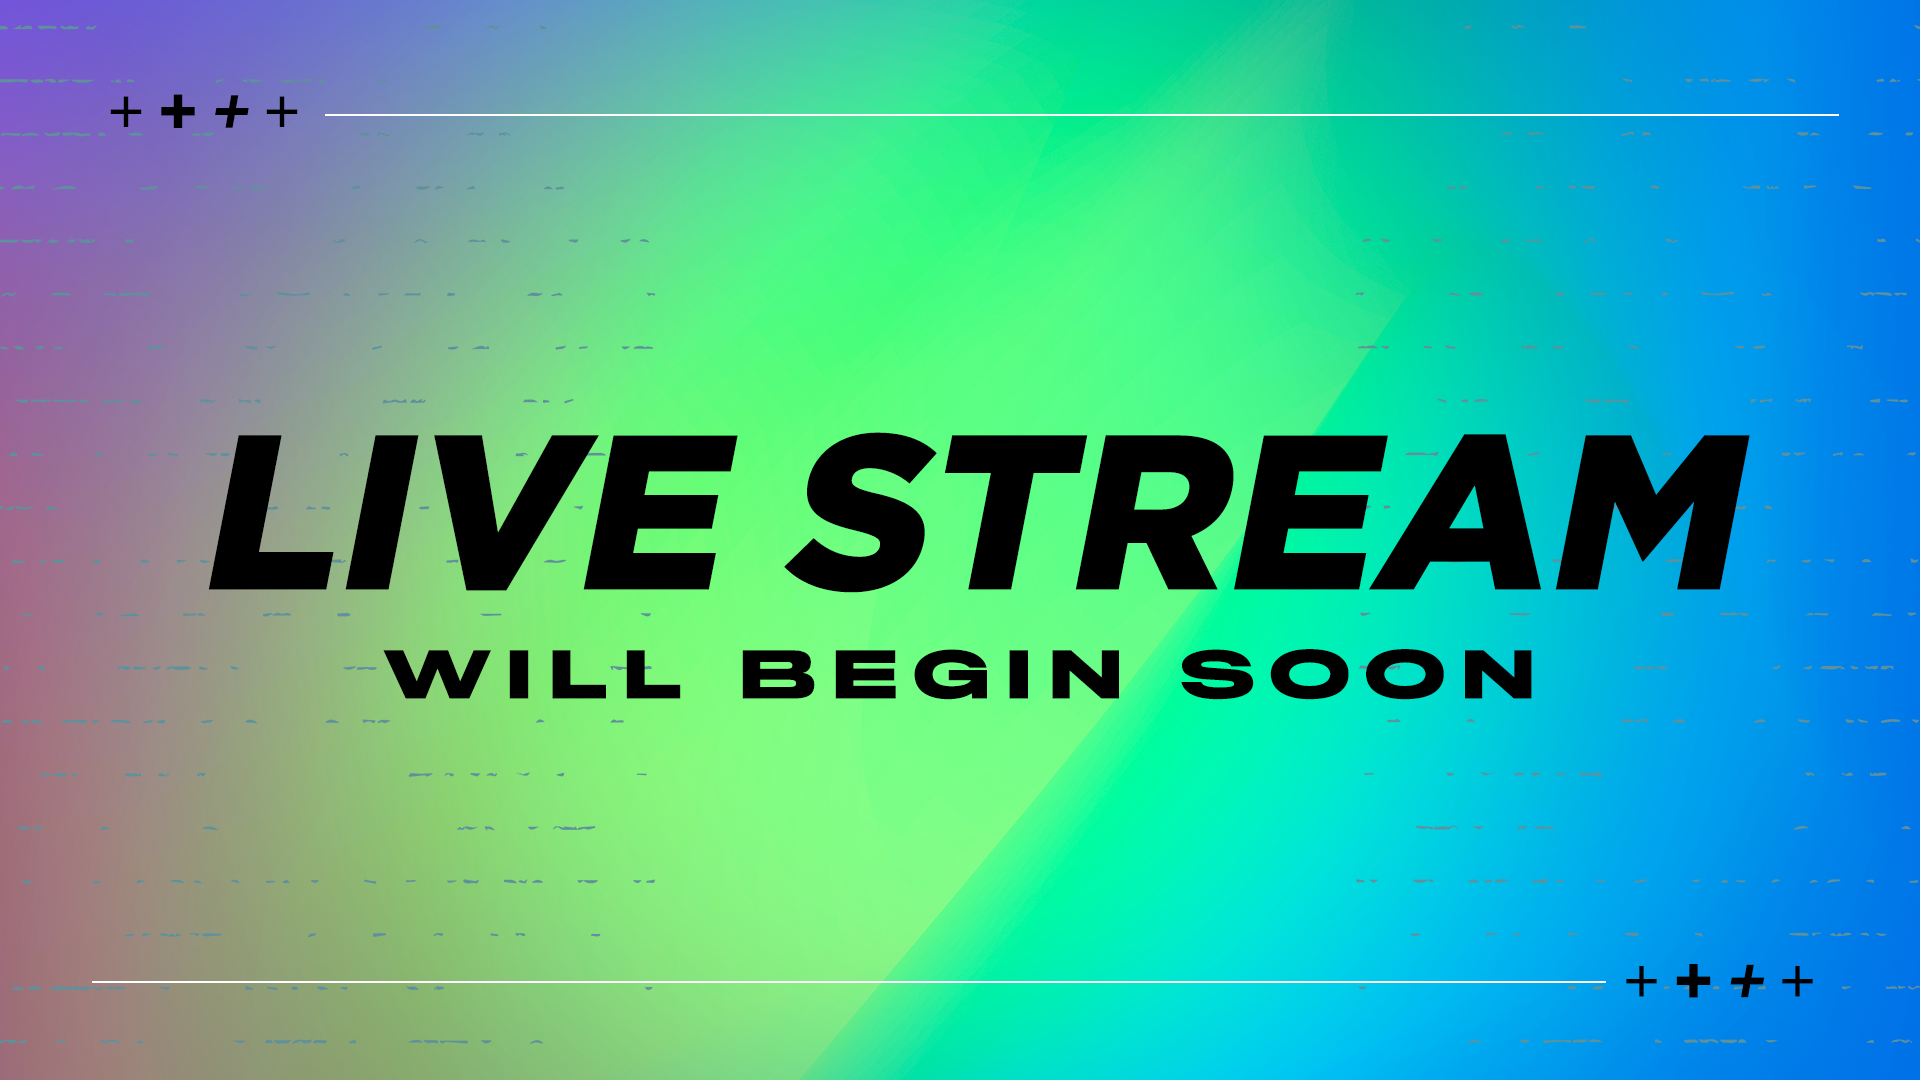 Live Stream. Live Stream will begin shortly.